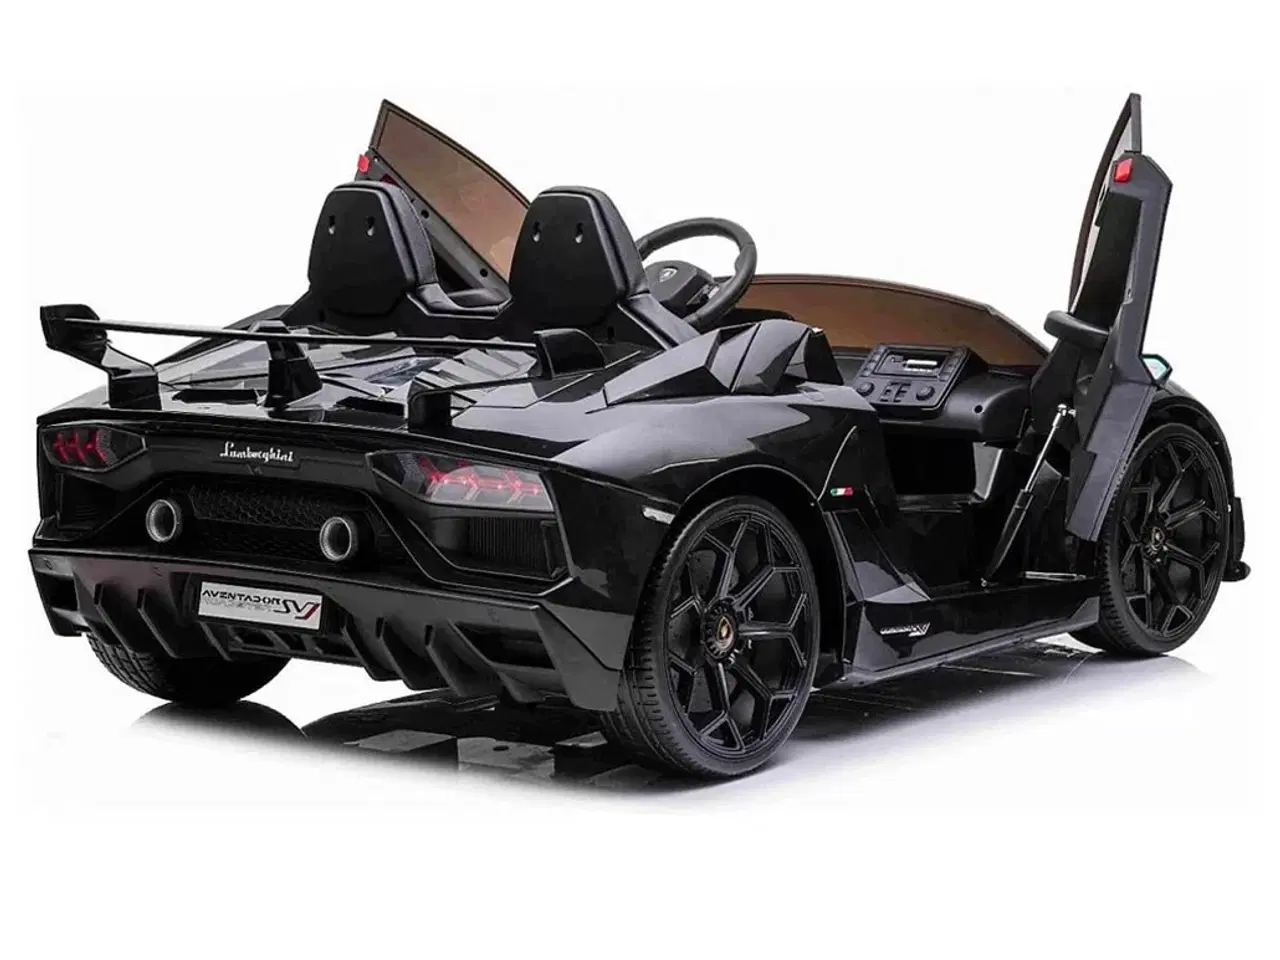 Billede 4 - Ny Lamborghini Aventador elbil til børn